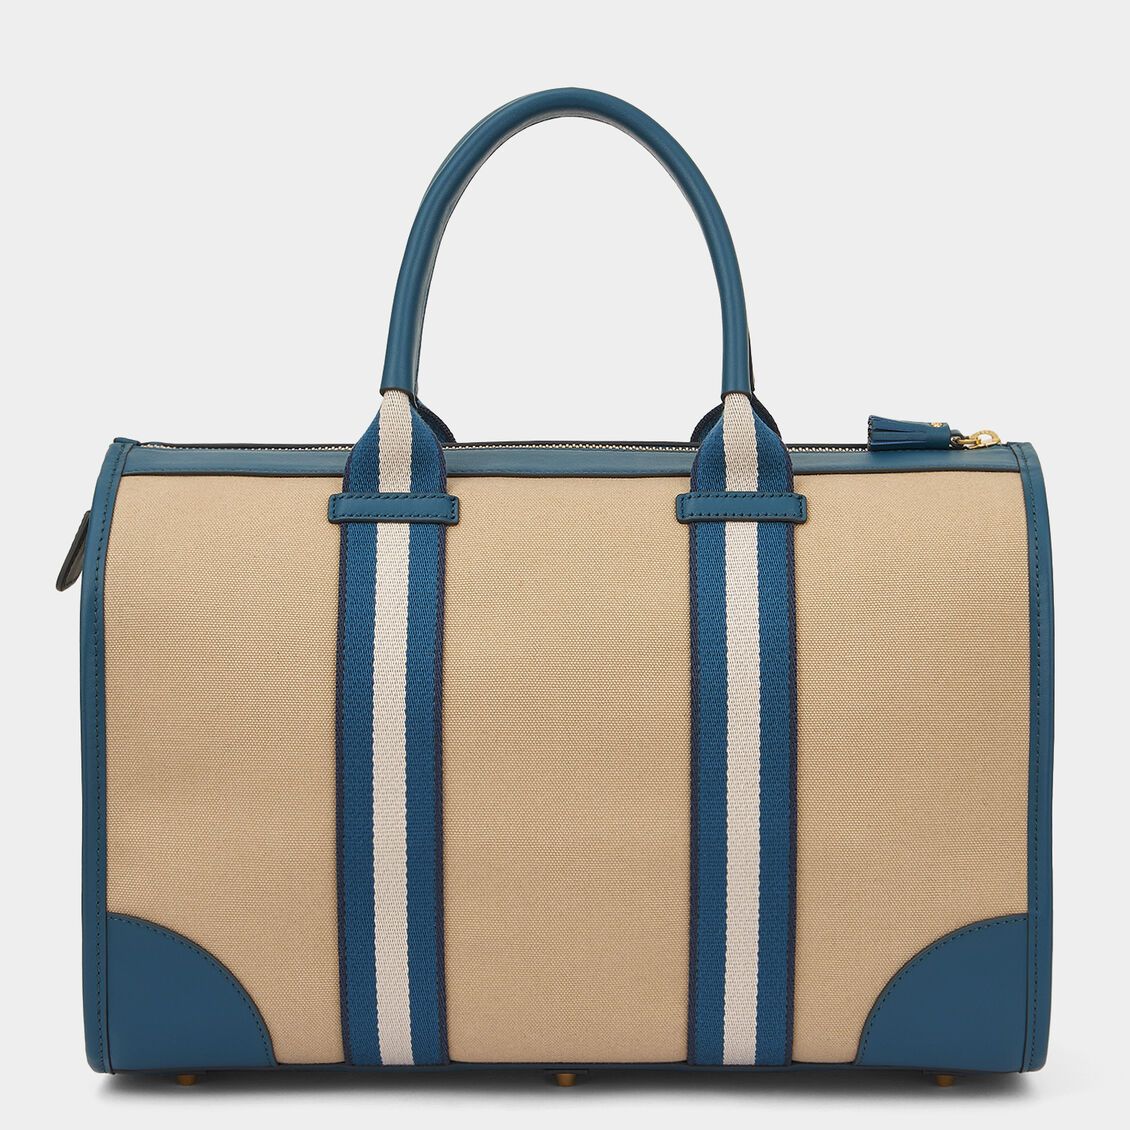 Buy Online Lv Handbag Long Strap With Box In Pakistan